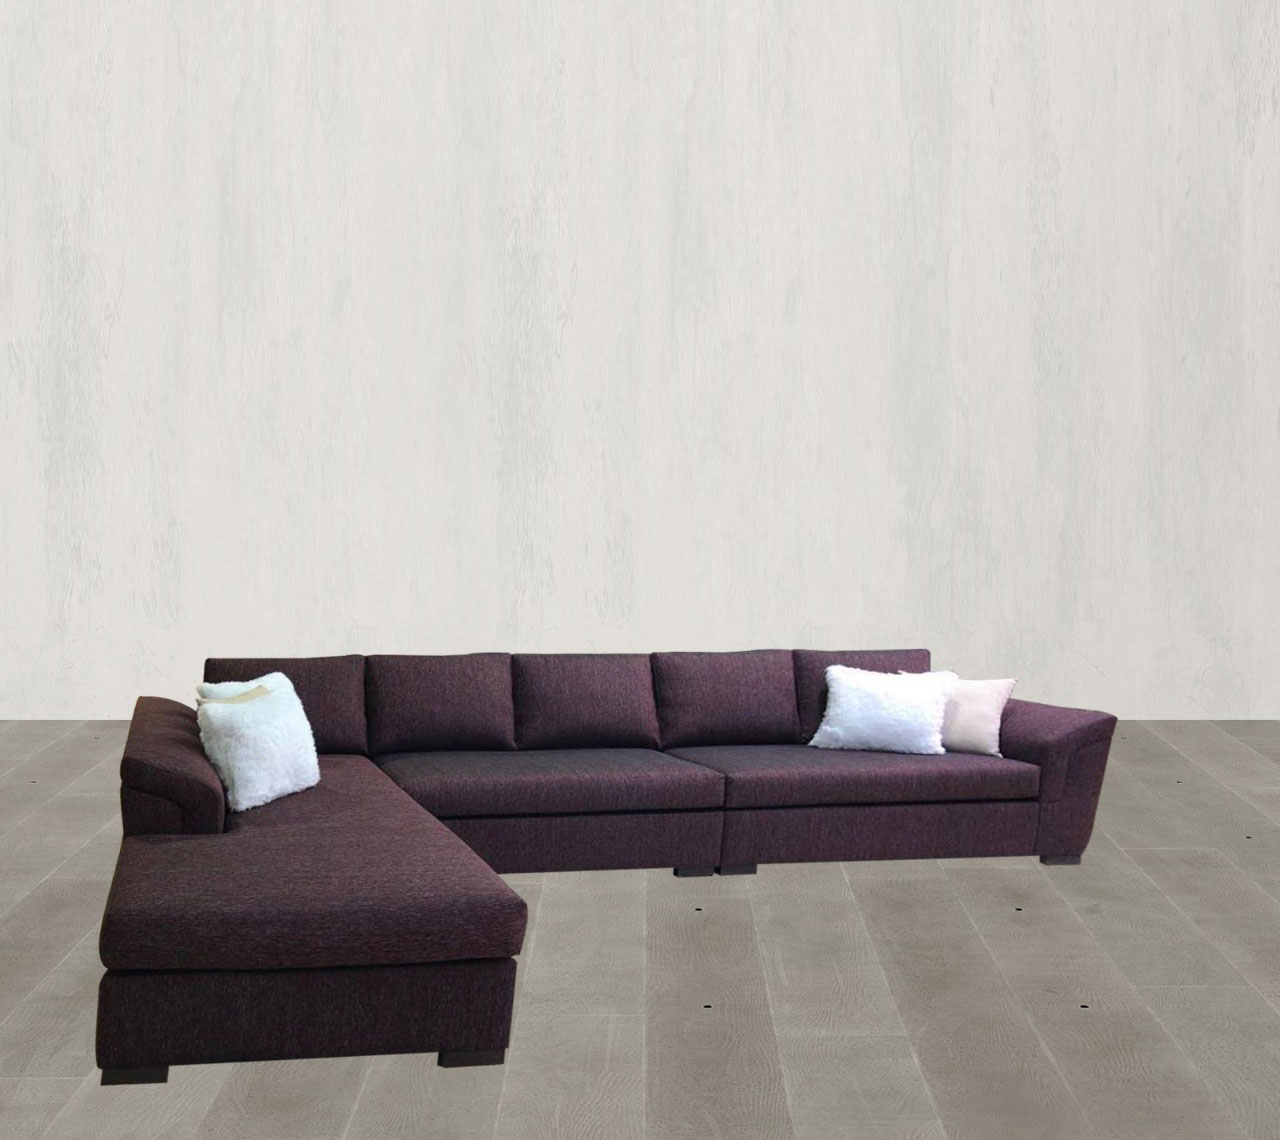 IKEA Design Sofa Set Corner Cloth Material Size 3.5x2m 